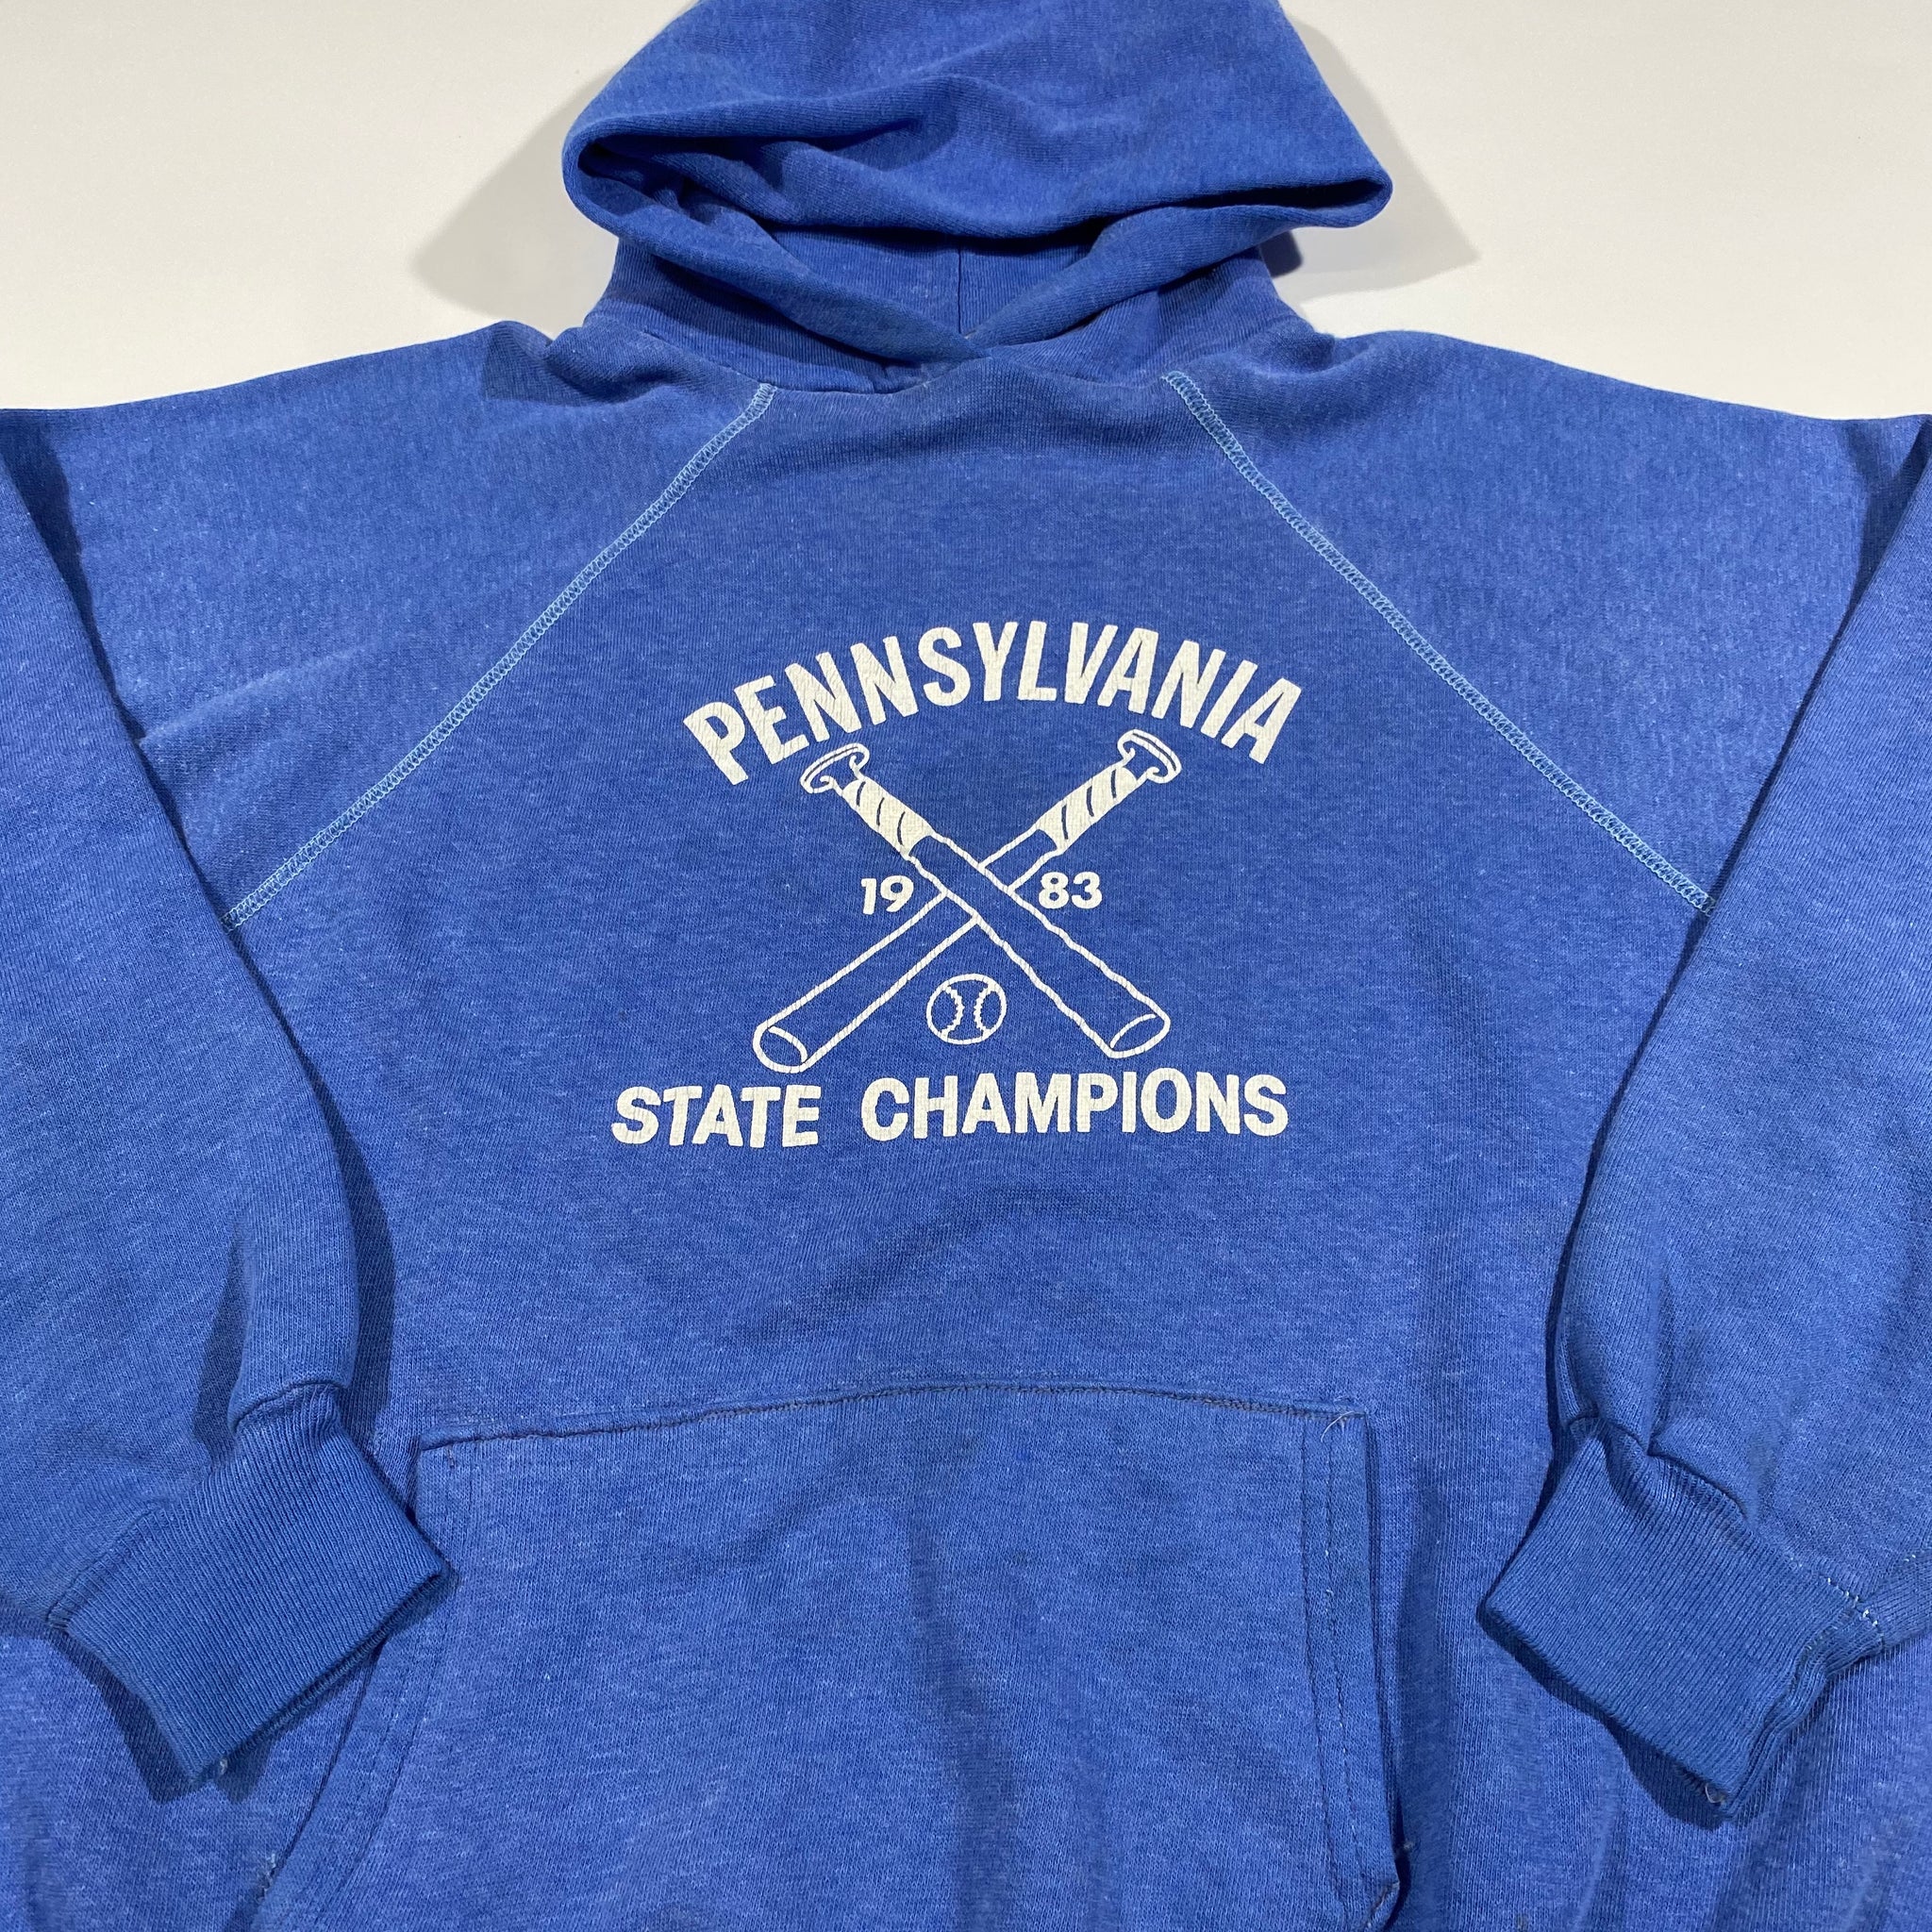 1983 pennsylvania state champs hoodie. medium